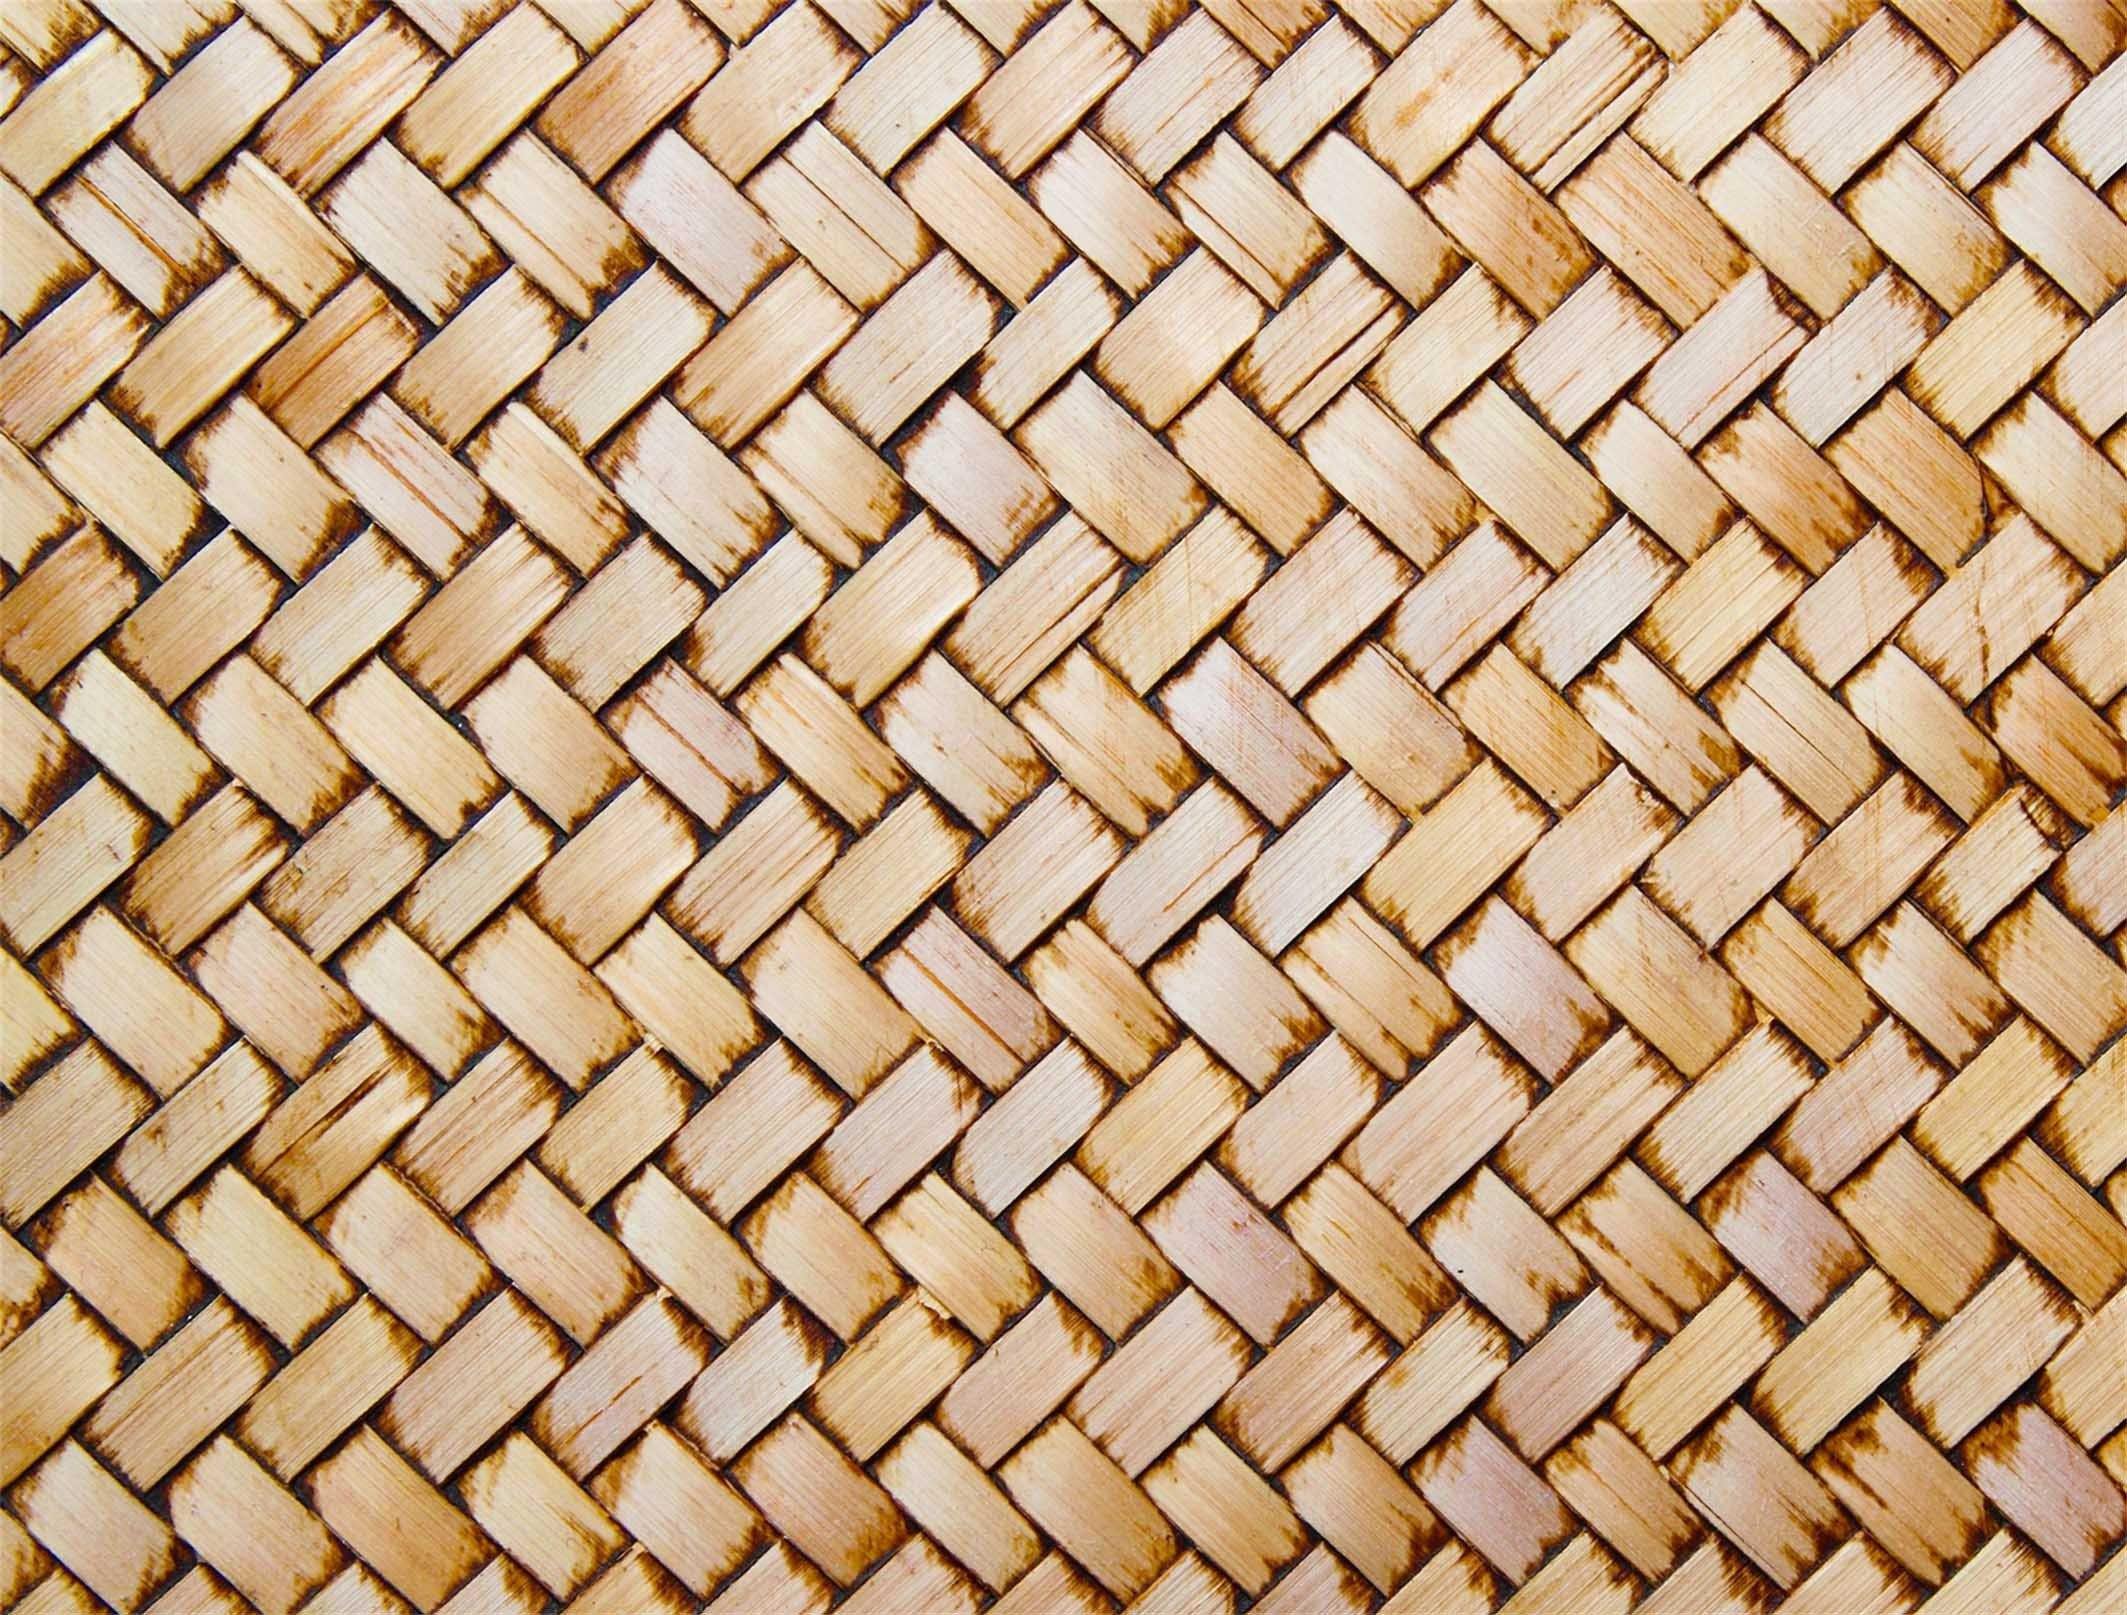 3D Retro Bamboo Weave Kitchen Mat Floor Mural Wallpaper AJ Wallpaper 